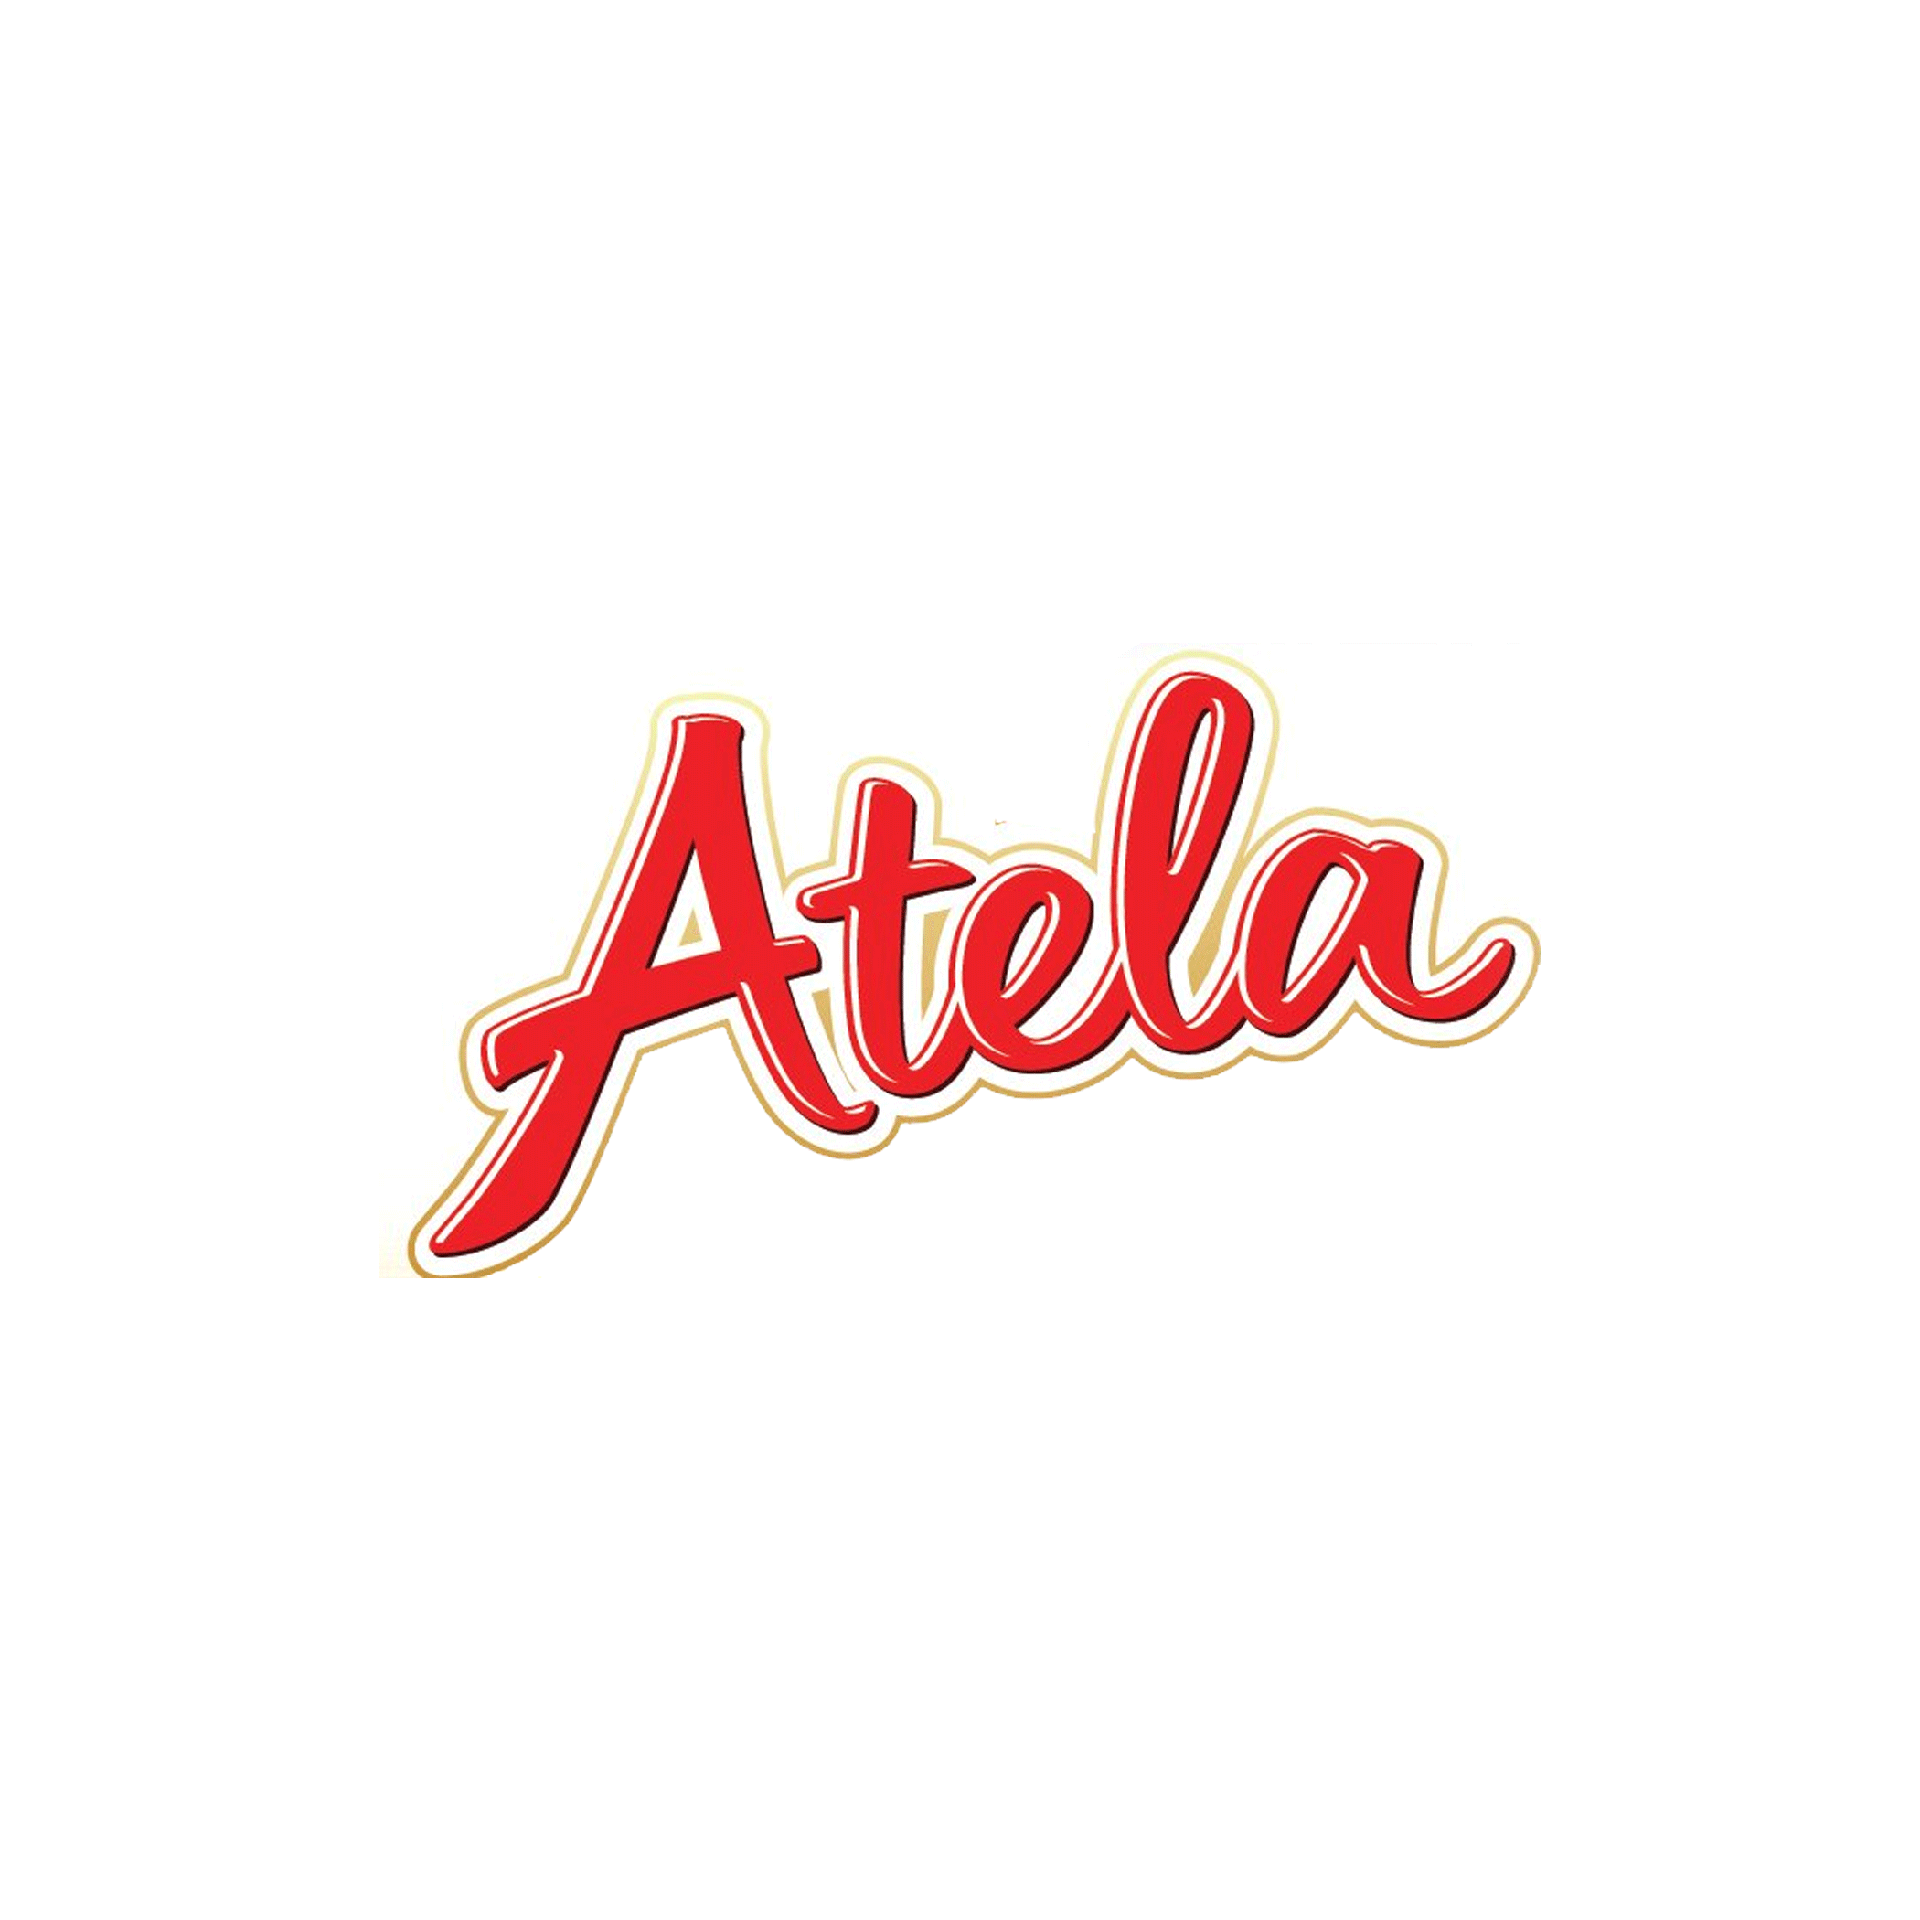 Product Brand: Atela